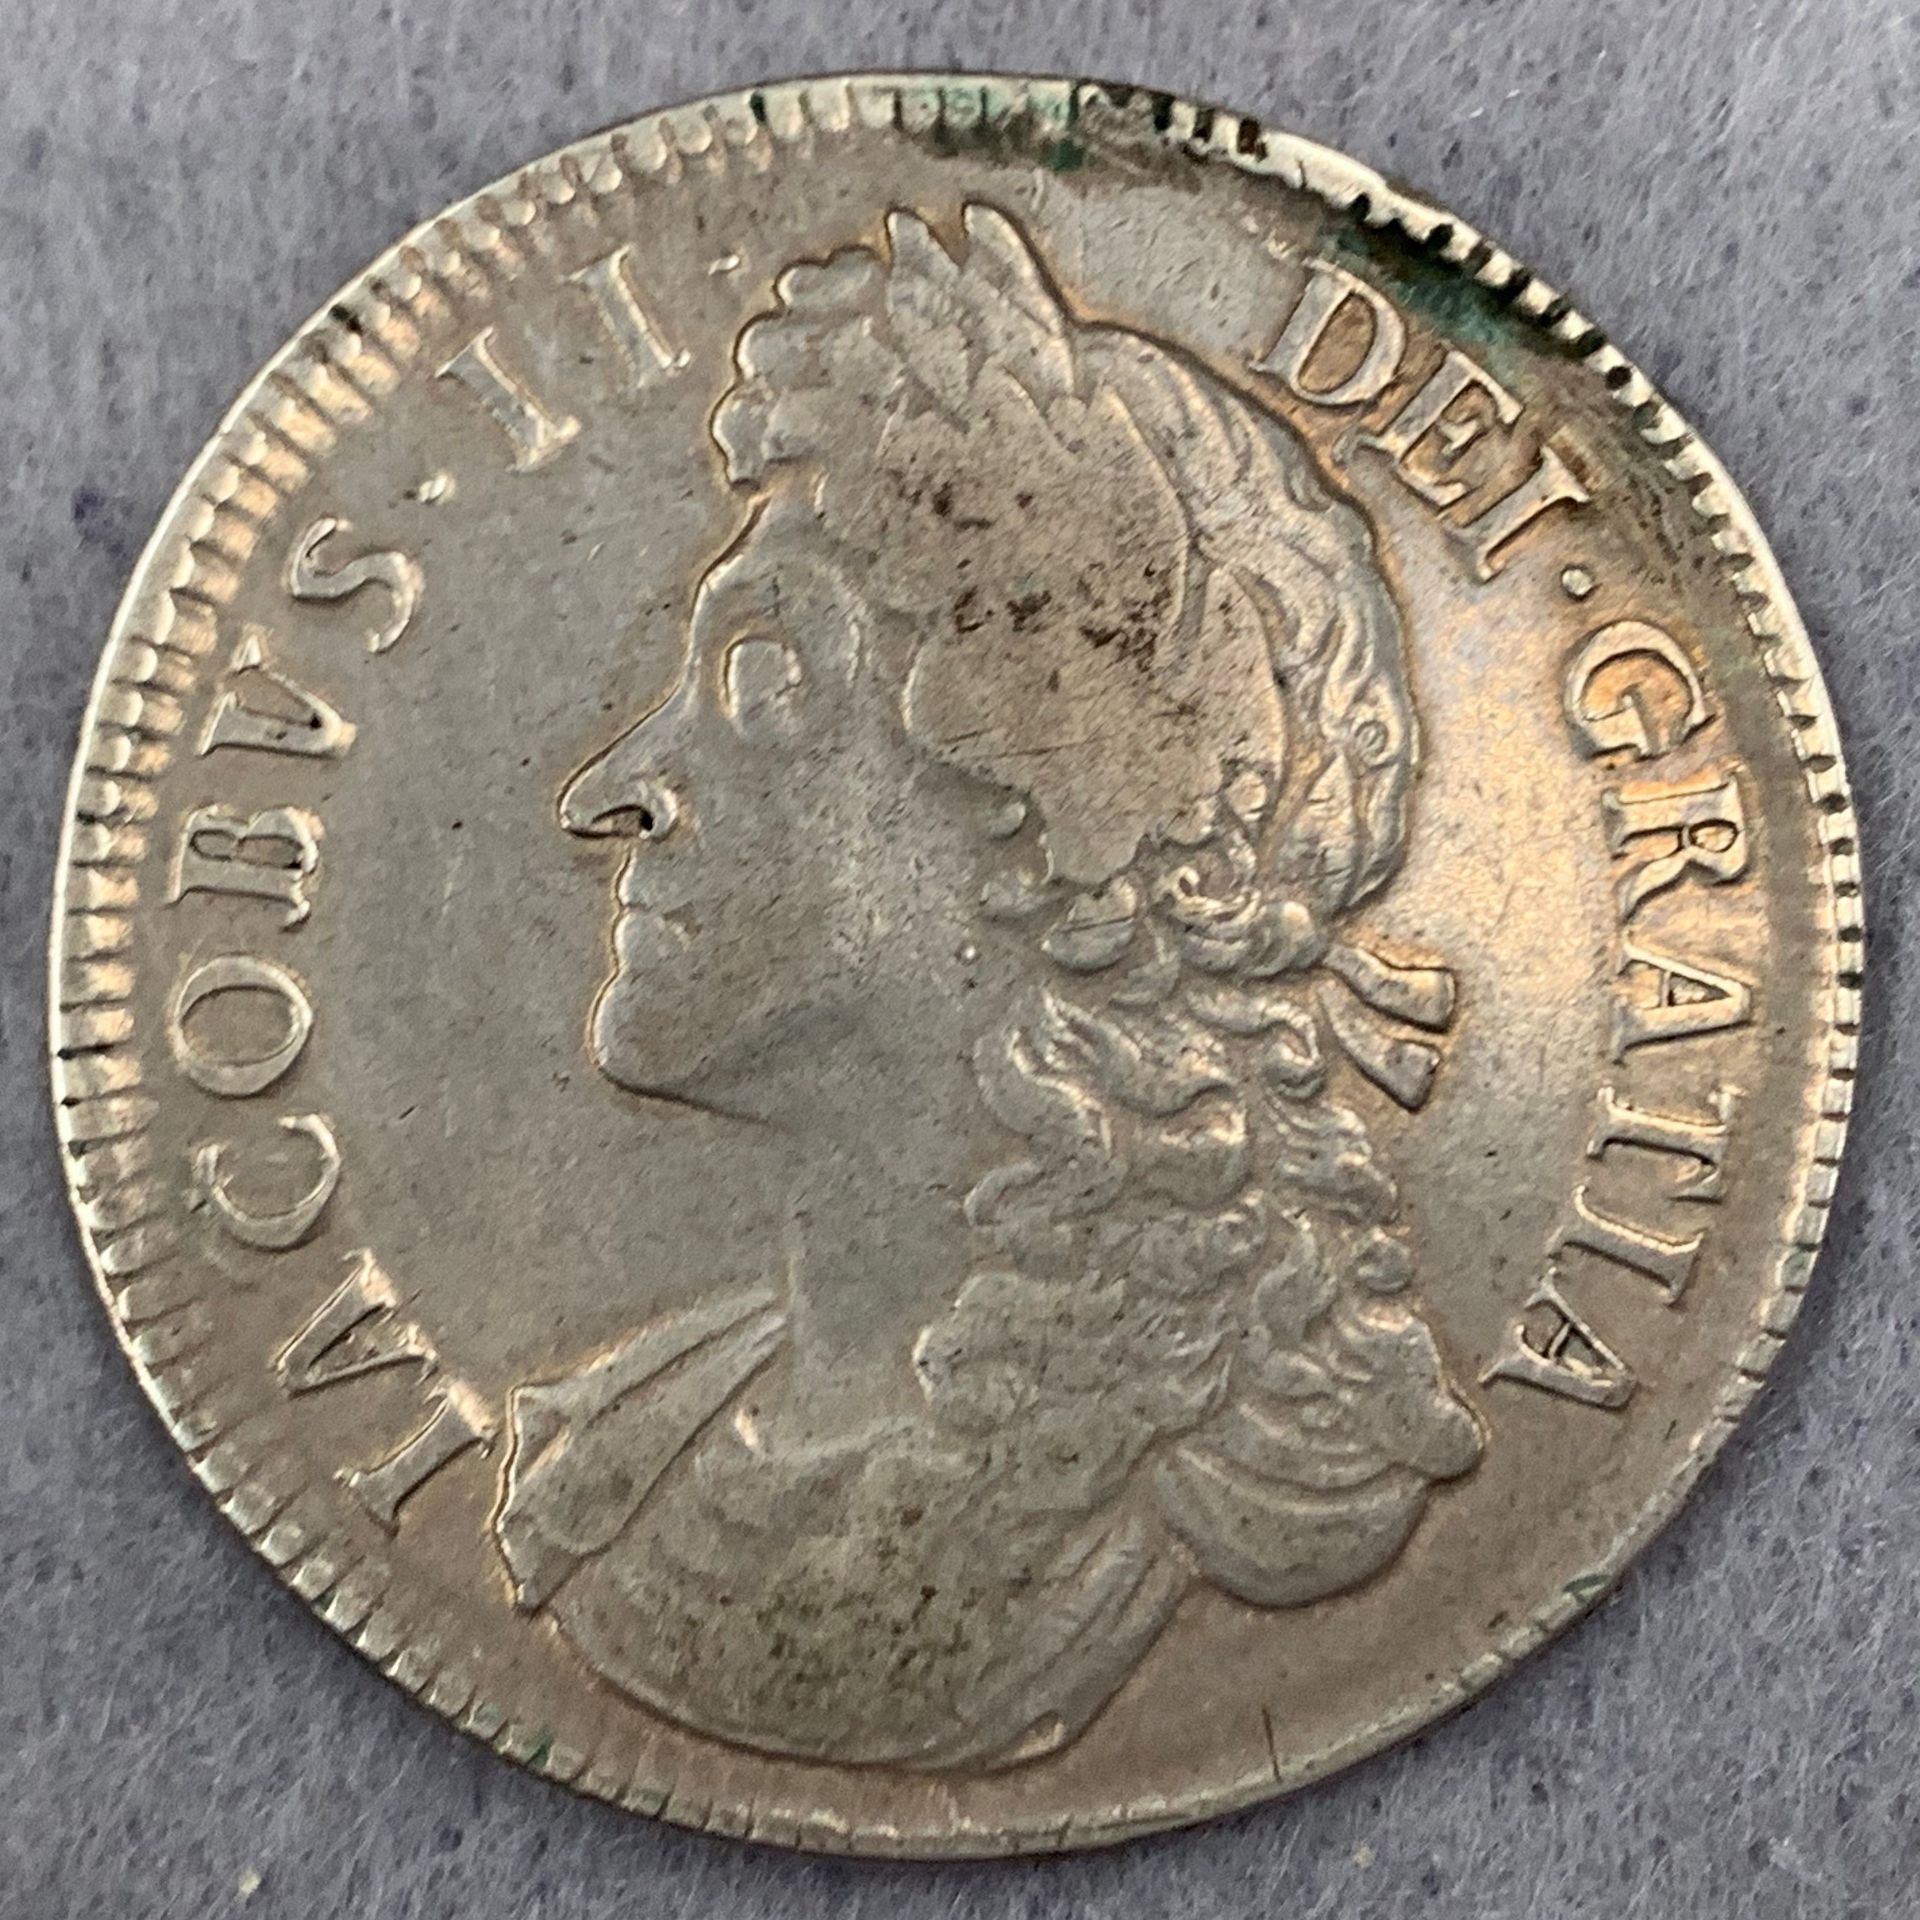 A 1687 James II silver crown - rare in good grade